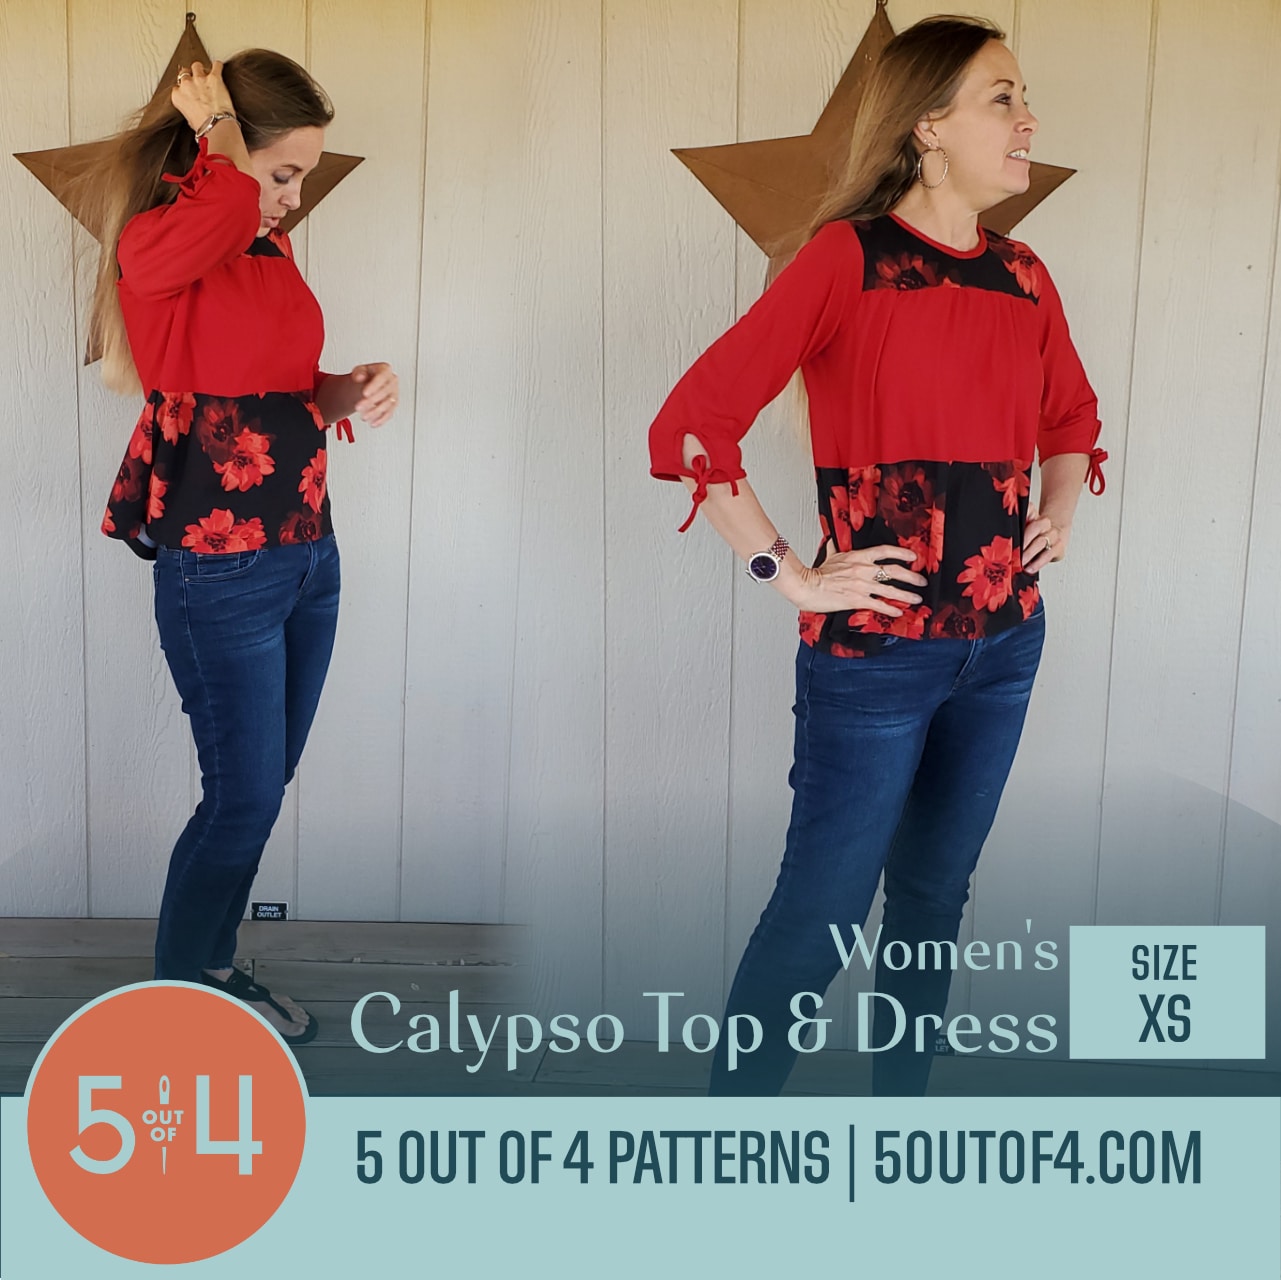 Calypso Top and Dress